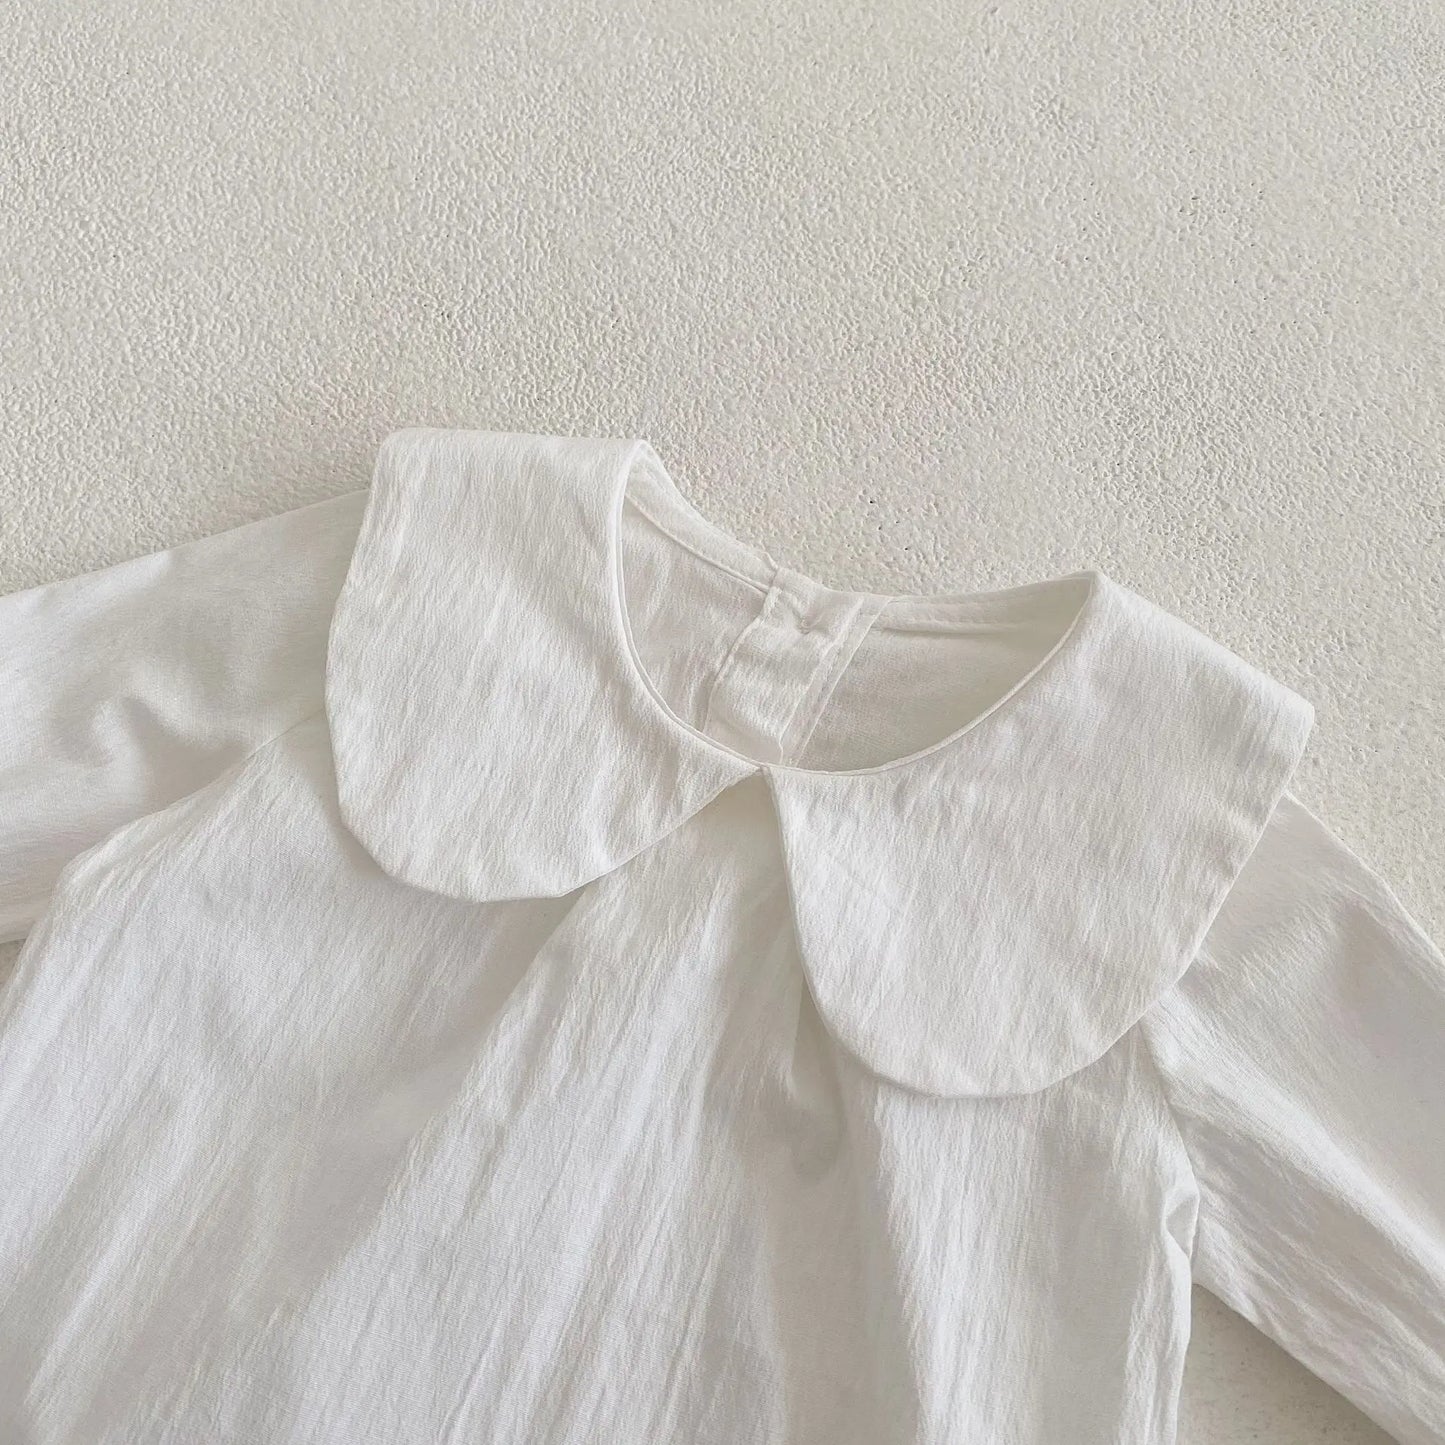 White Top & Plaid Skirt Romper - JAC